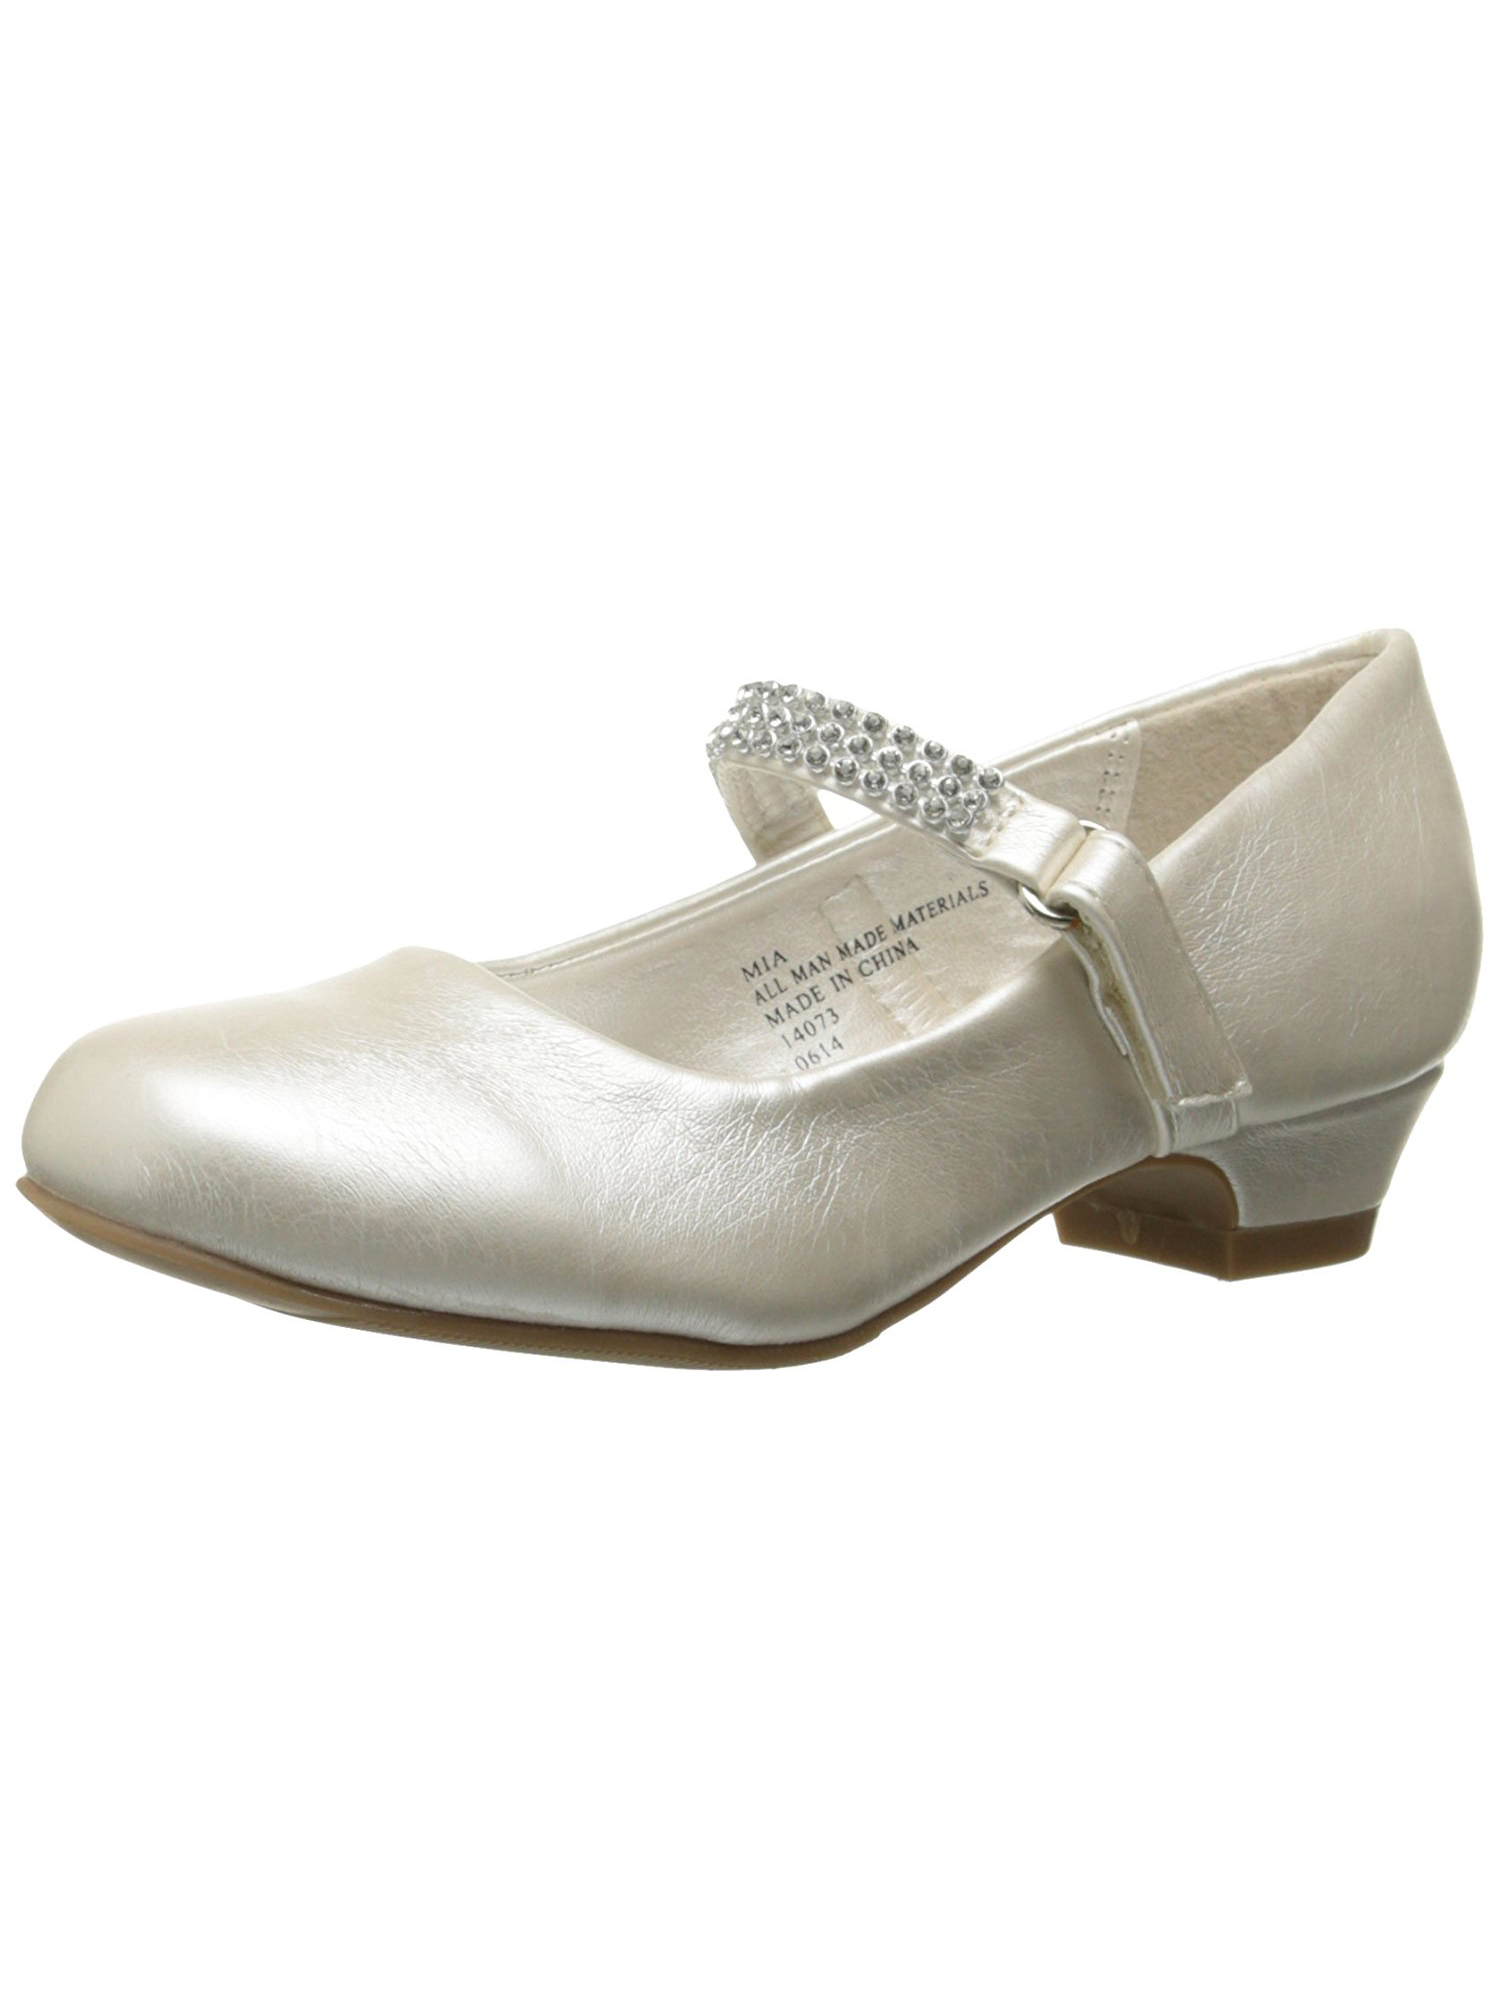 Girls Low Heel Dress Shoe With Rhinestone Strap (2, White)